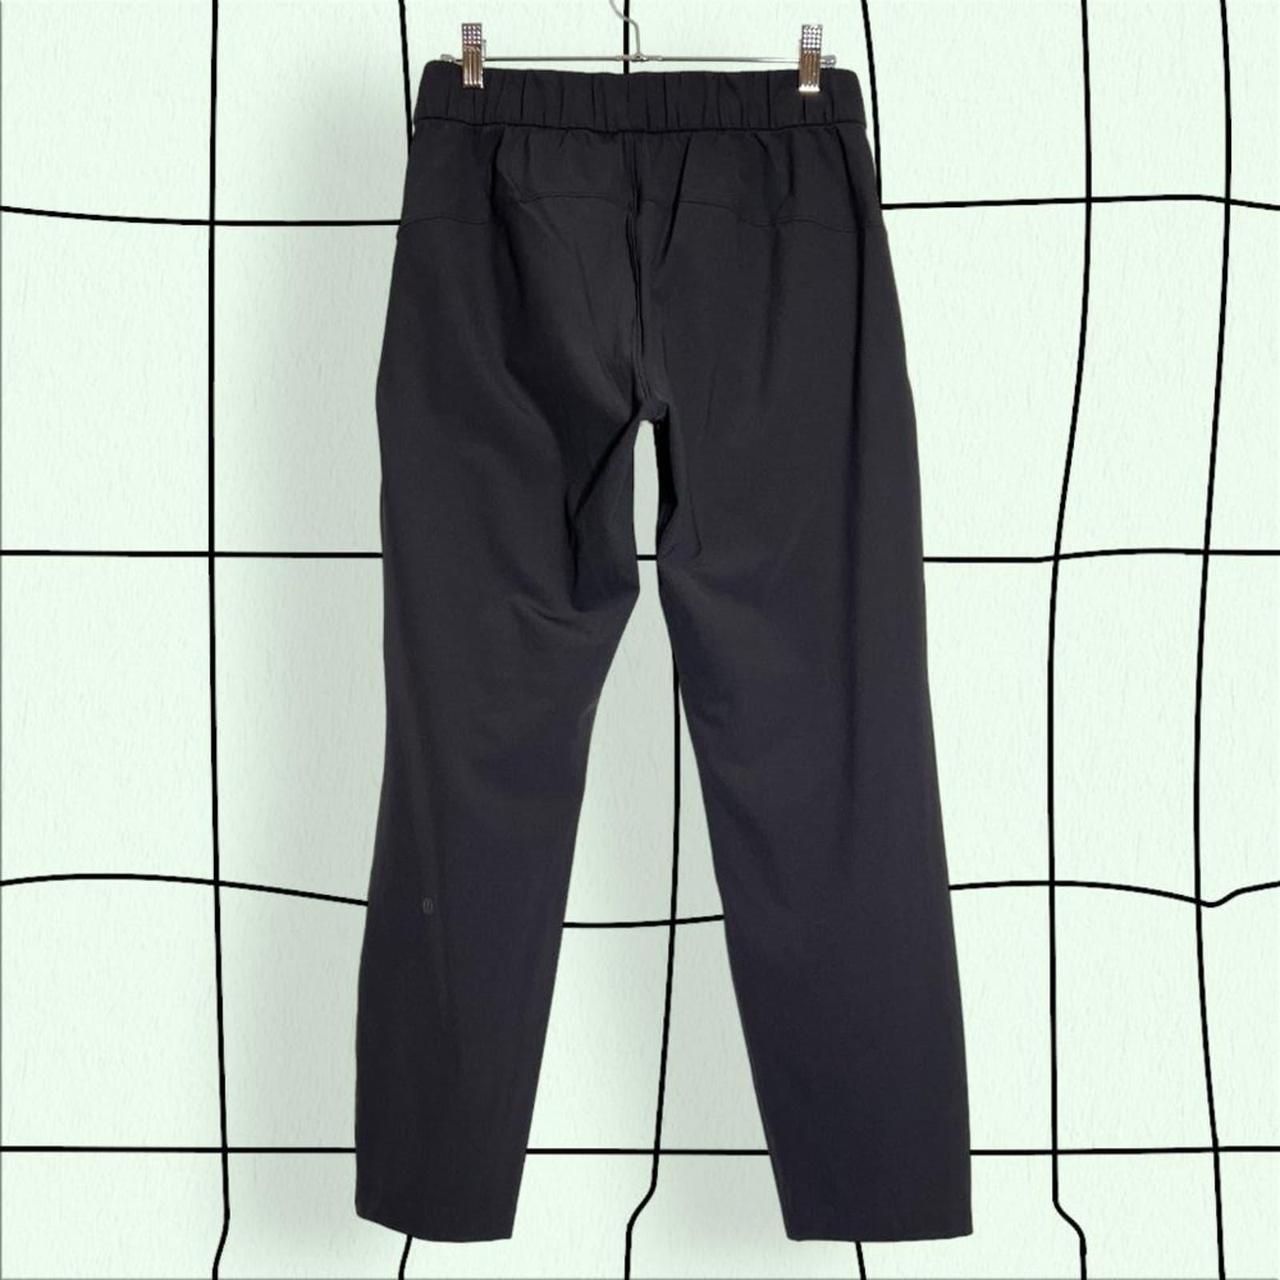 Black lululemon work pants #lululemon #comfy #black - Depop